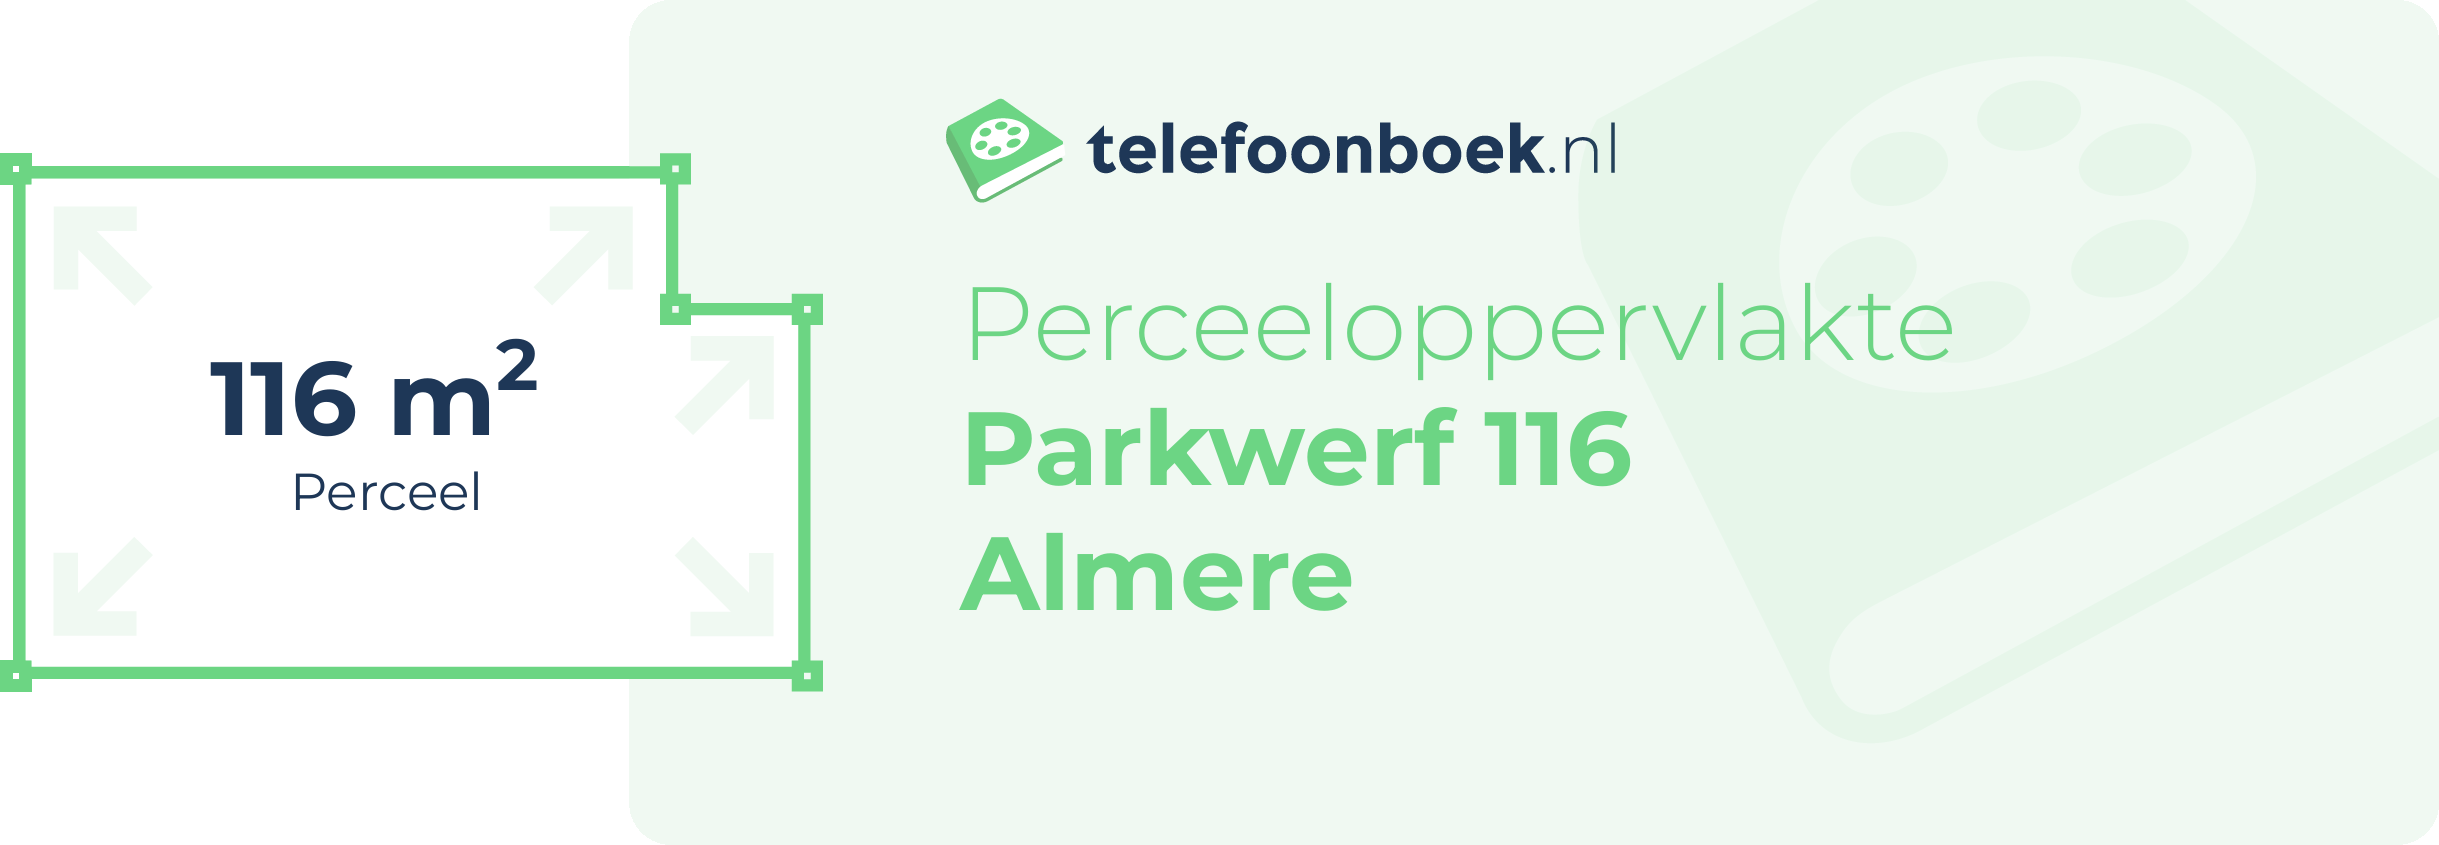 Perceeloppervlakte Parkwerf 116 Almere